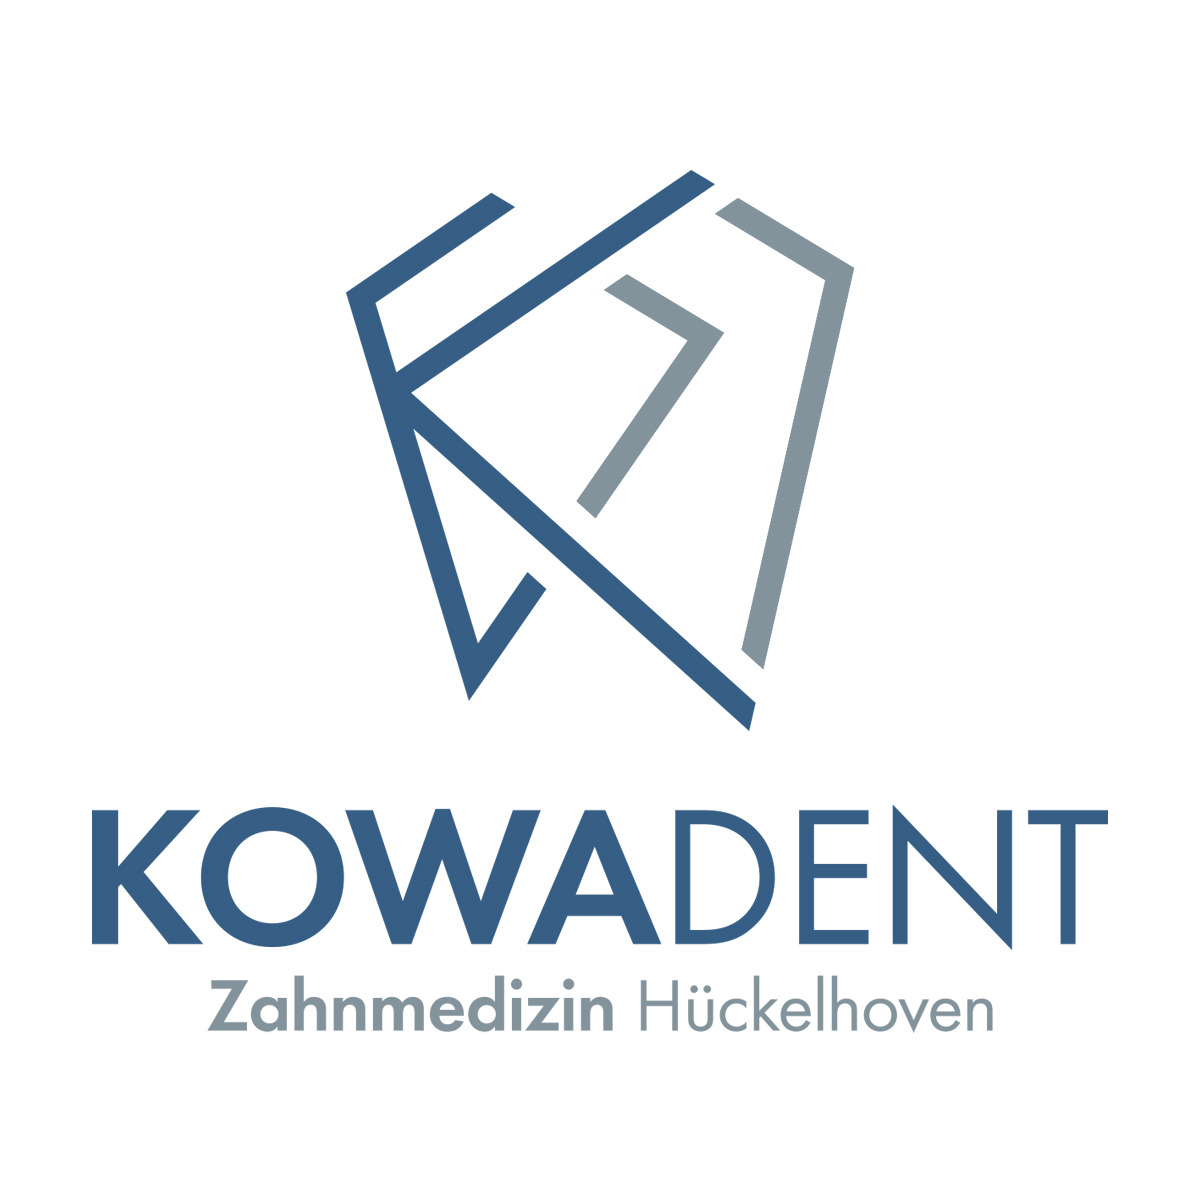 KOWADENT - Zahnmedizin Hückelhoven Andreas Kowallik & Kollegen in Hückelhoven - Logo